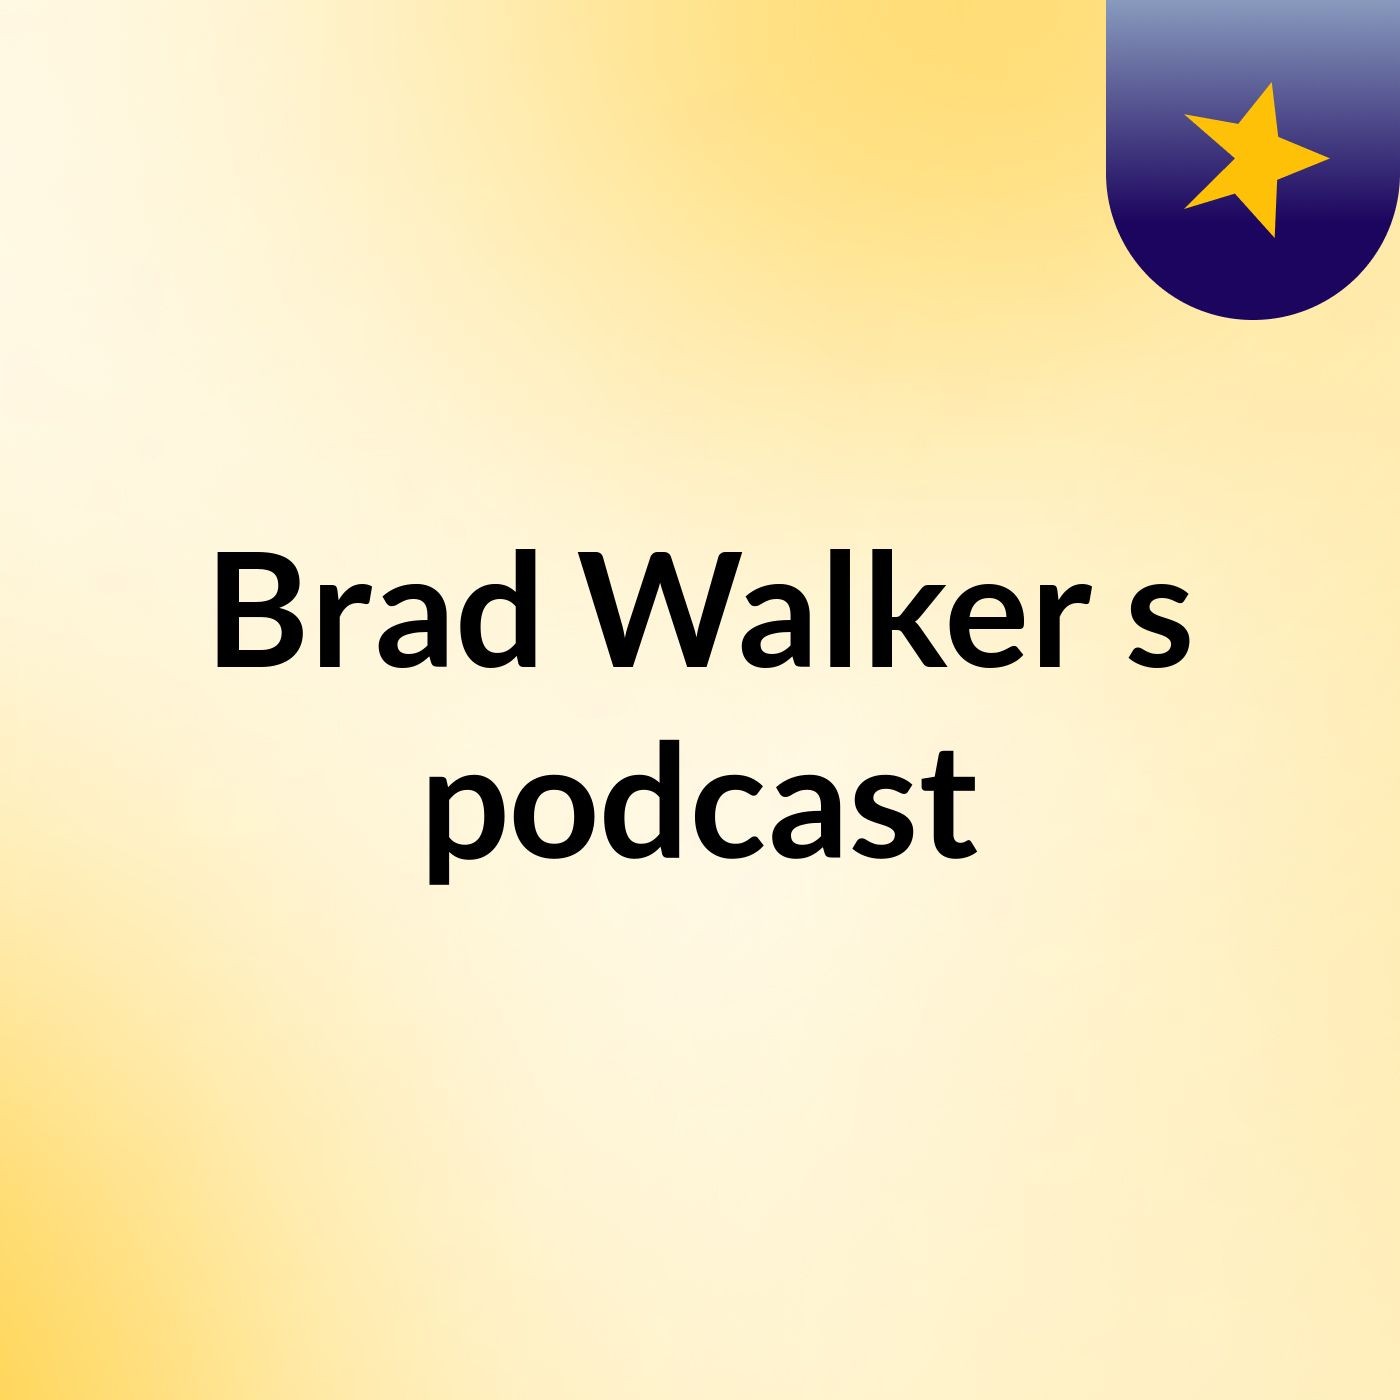 Episode 2 - Brad Walker's podcast